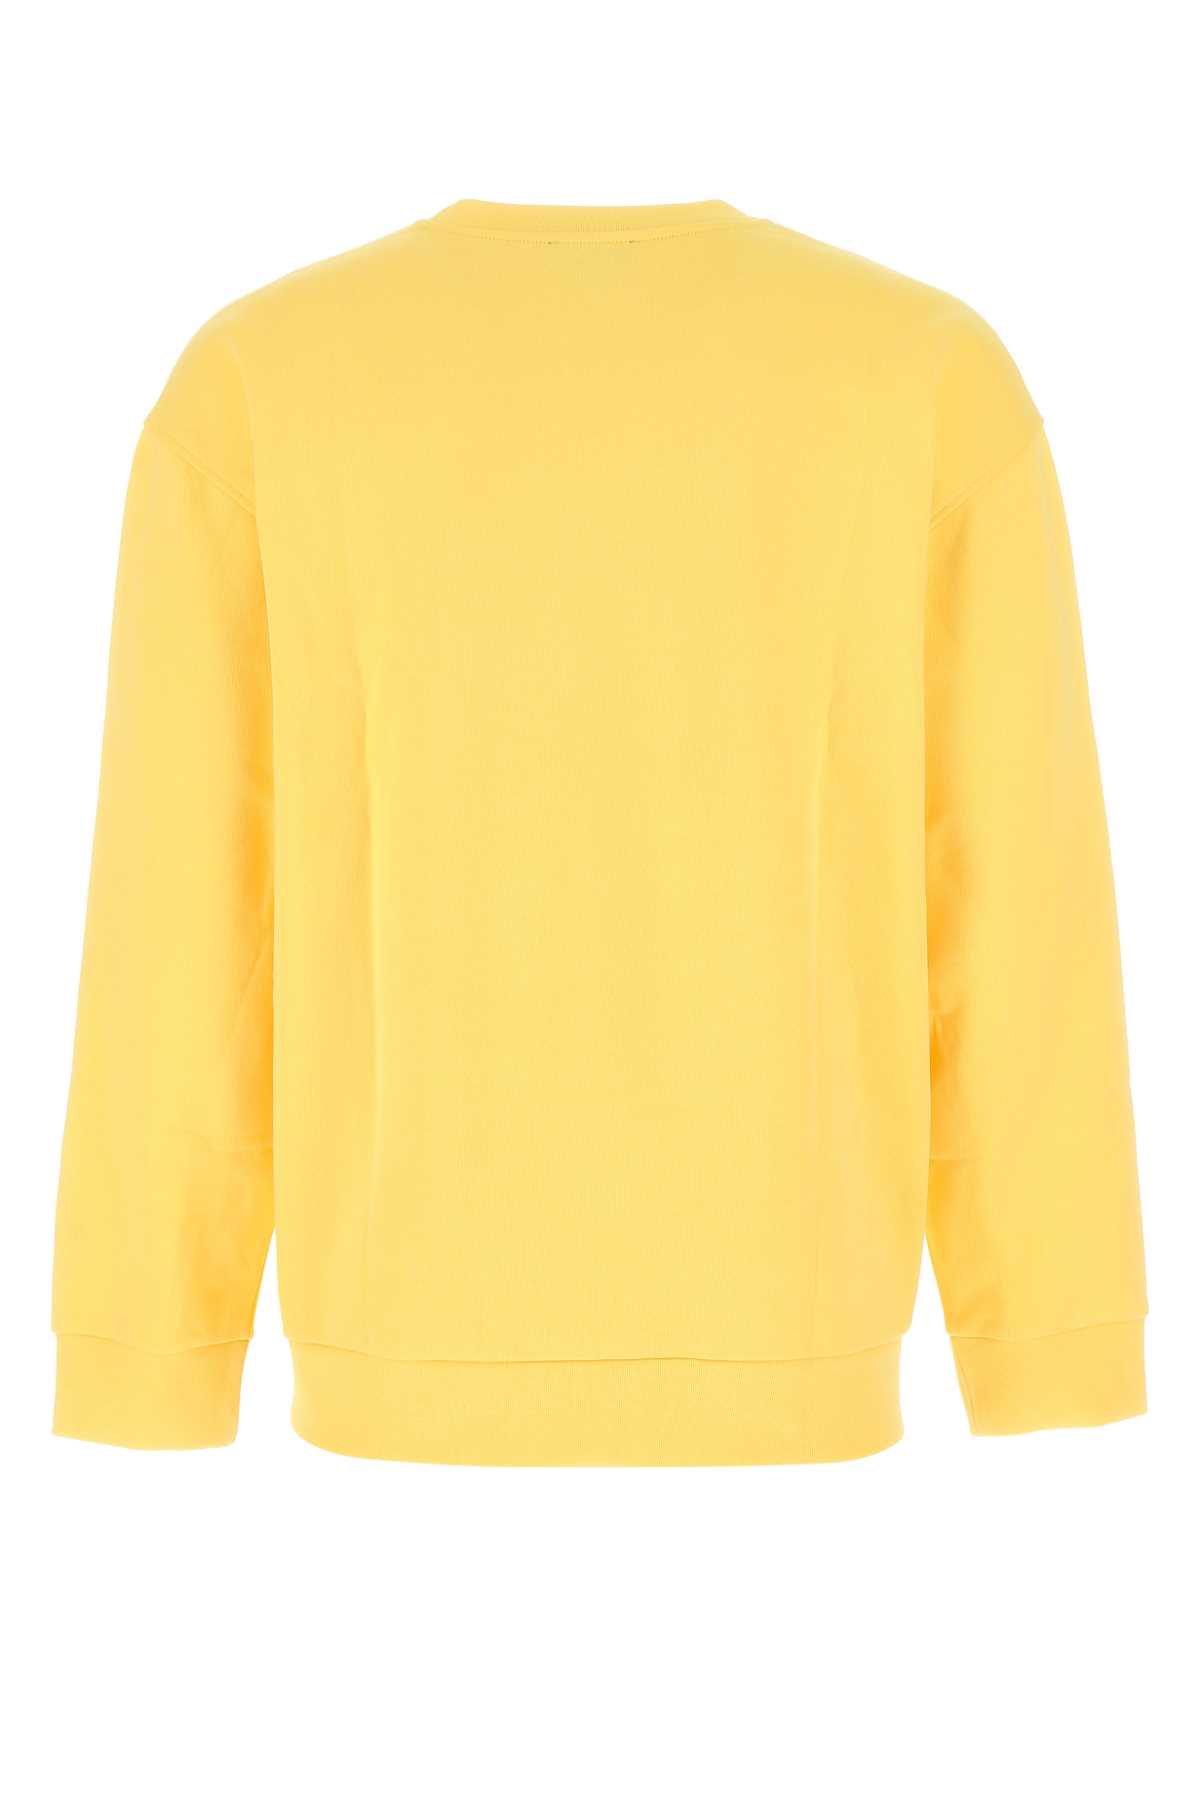 Shop Apc Pastel Yellow Cotton Sweatshirt